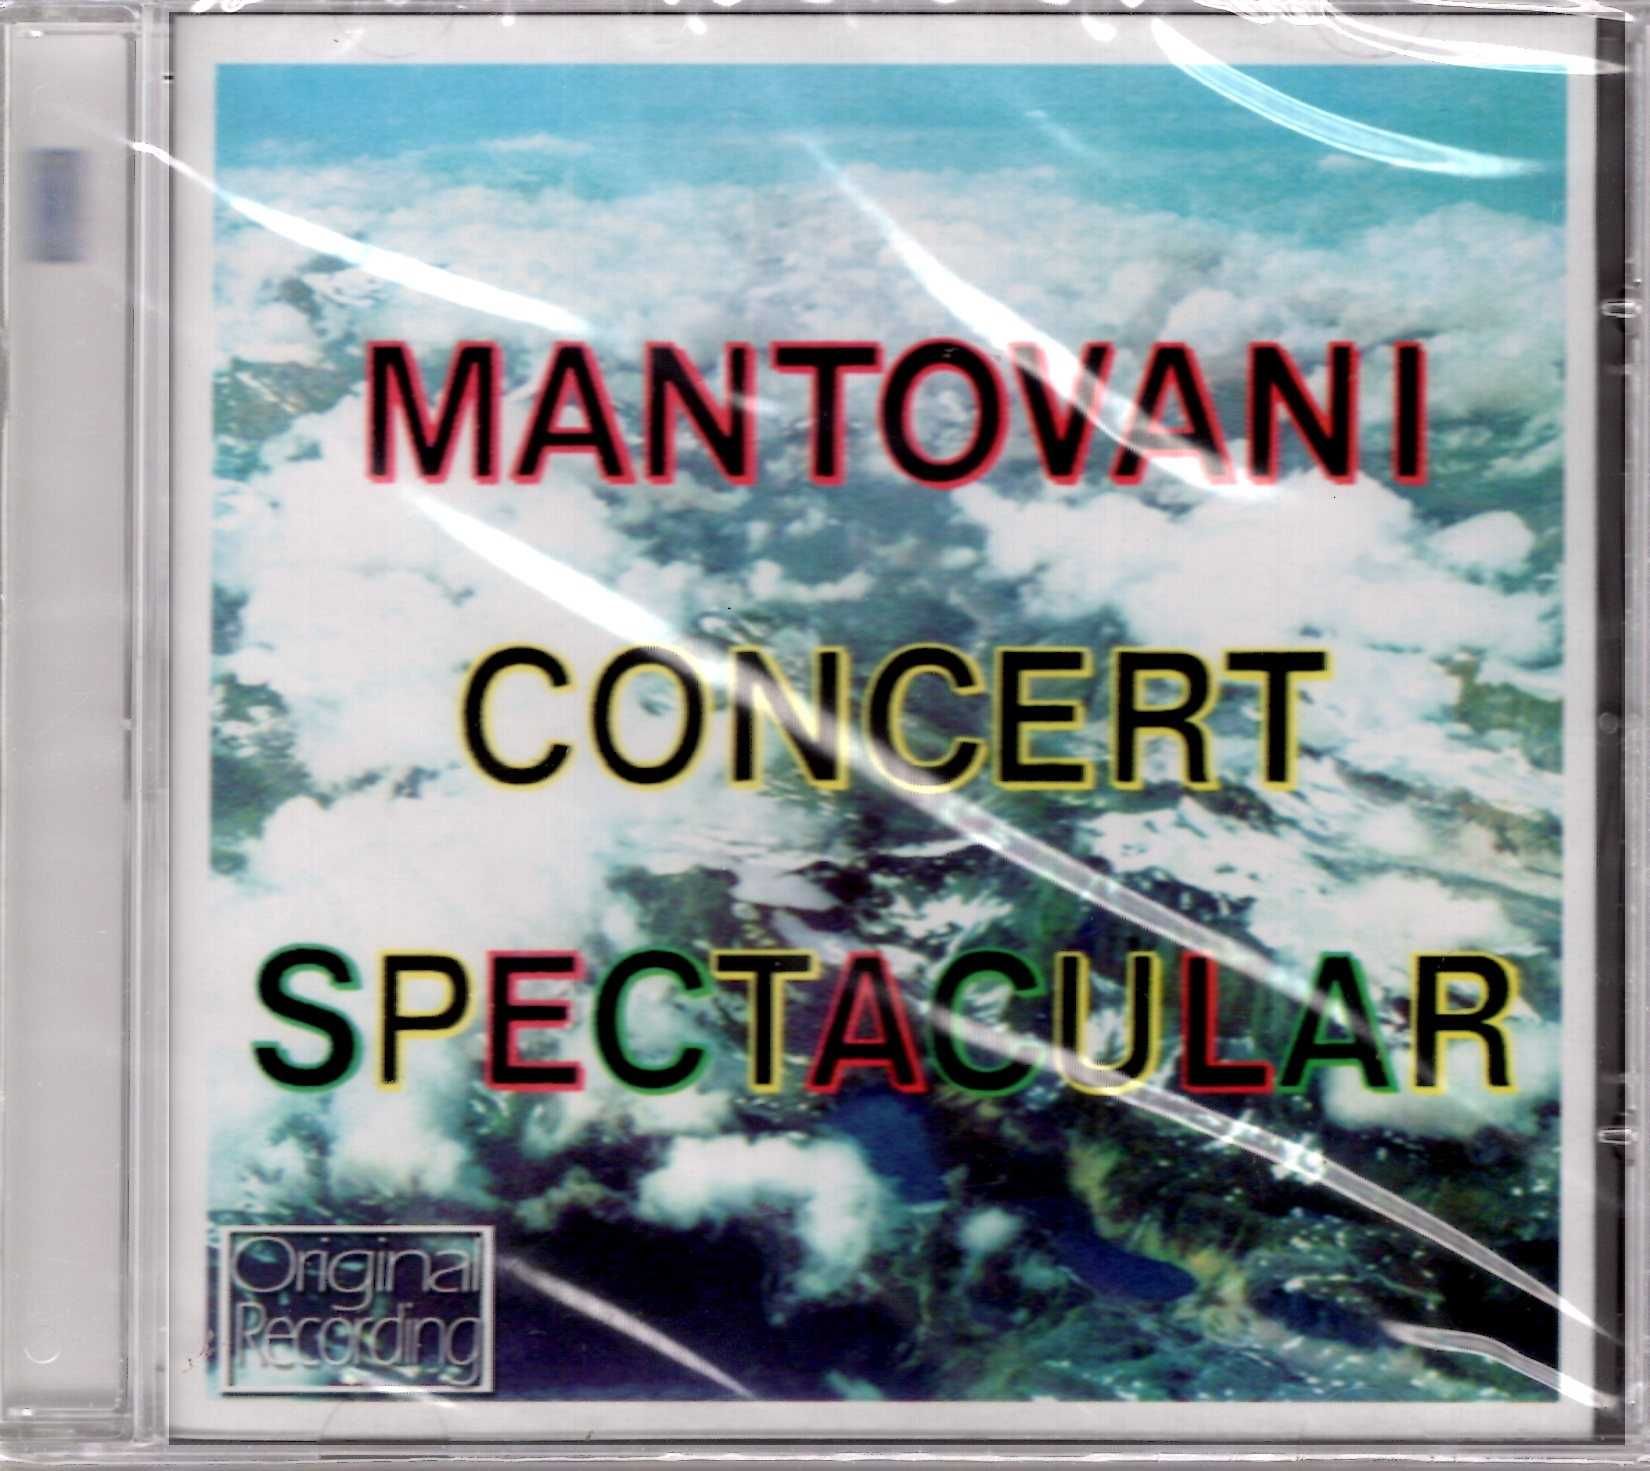 Mantovani - Concert Spectacular (CD)